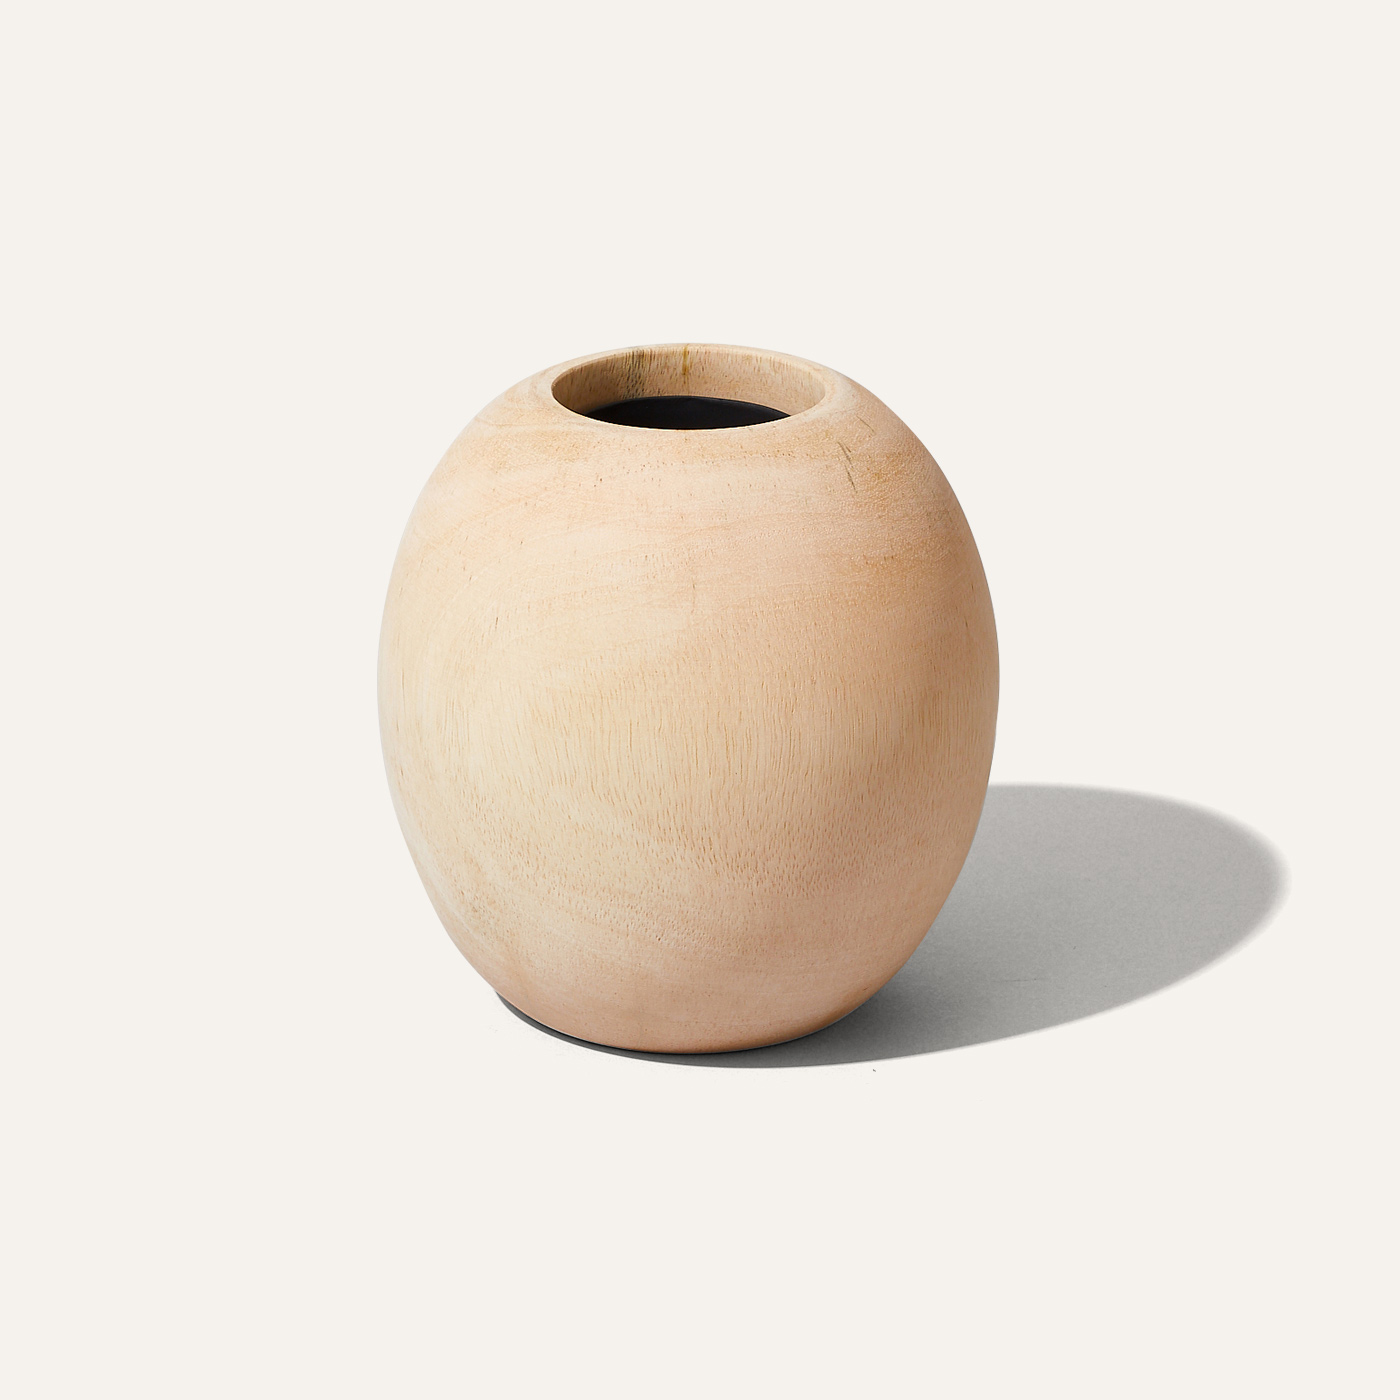 mango wood vase natural